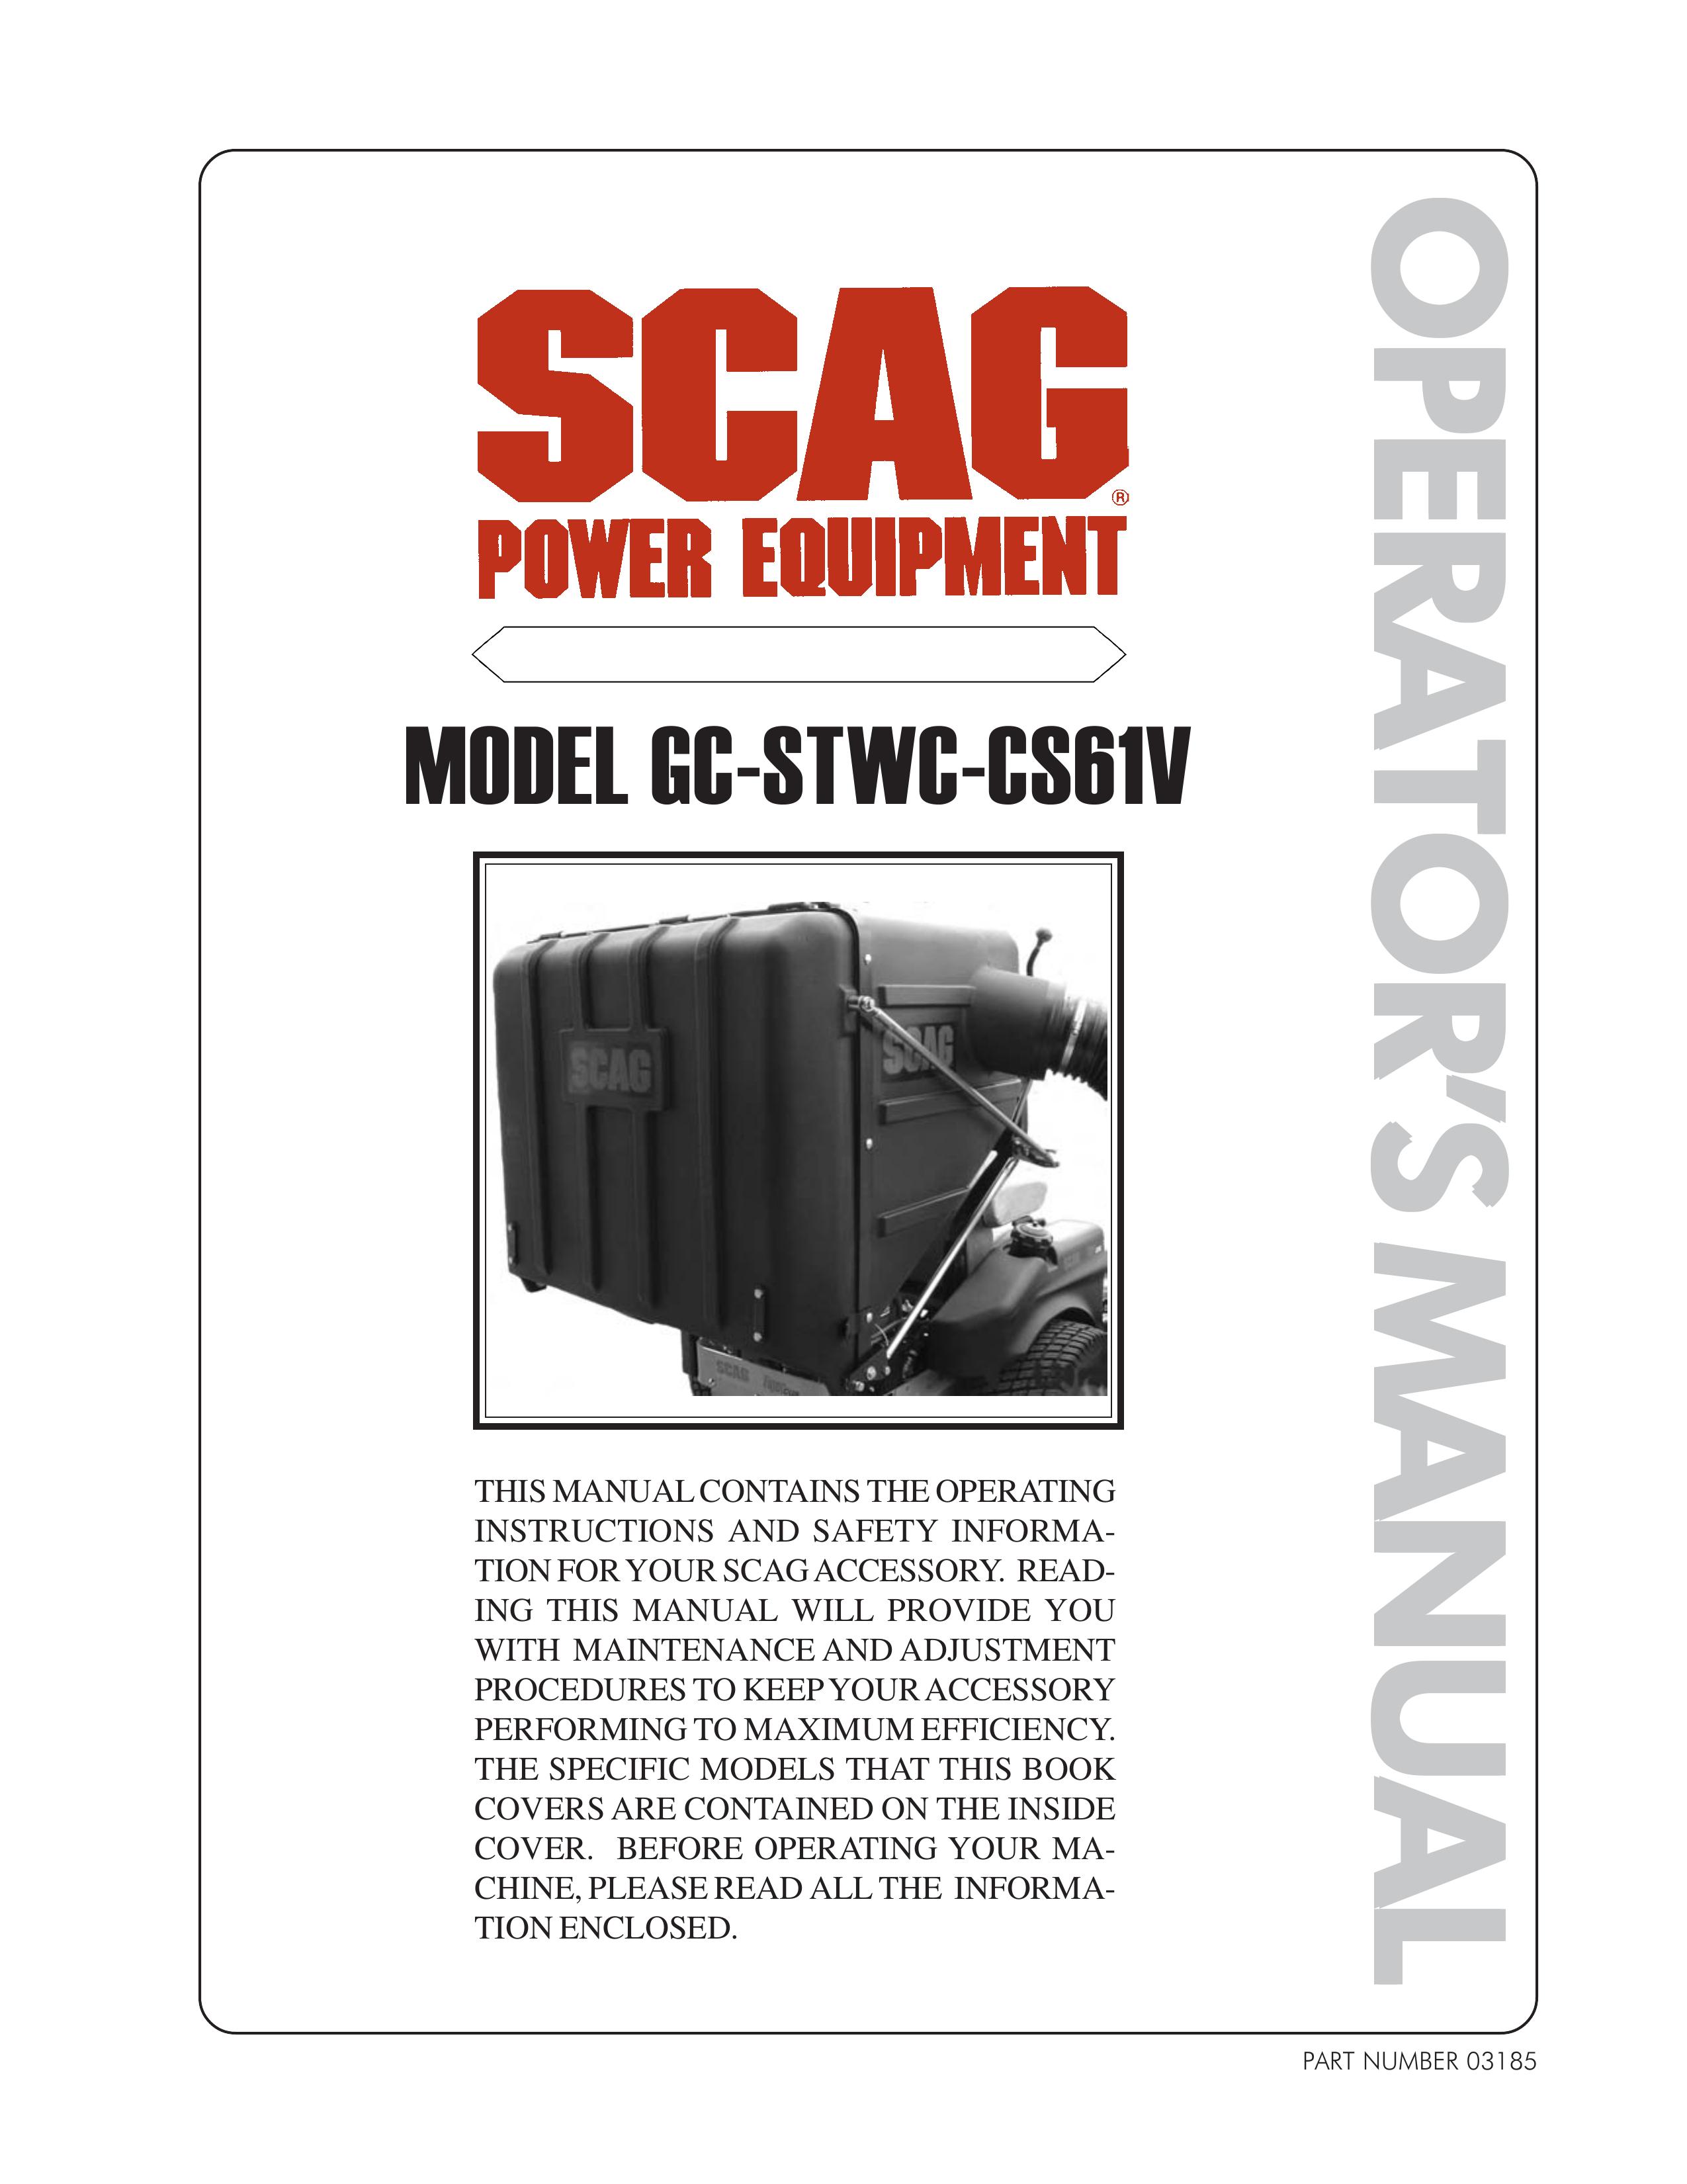 Scag Power Equipment GC-STWC-CS61V Lawn Mower User Manual